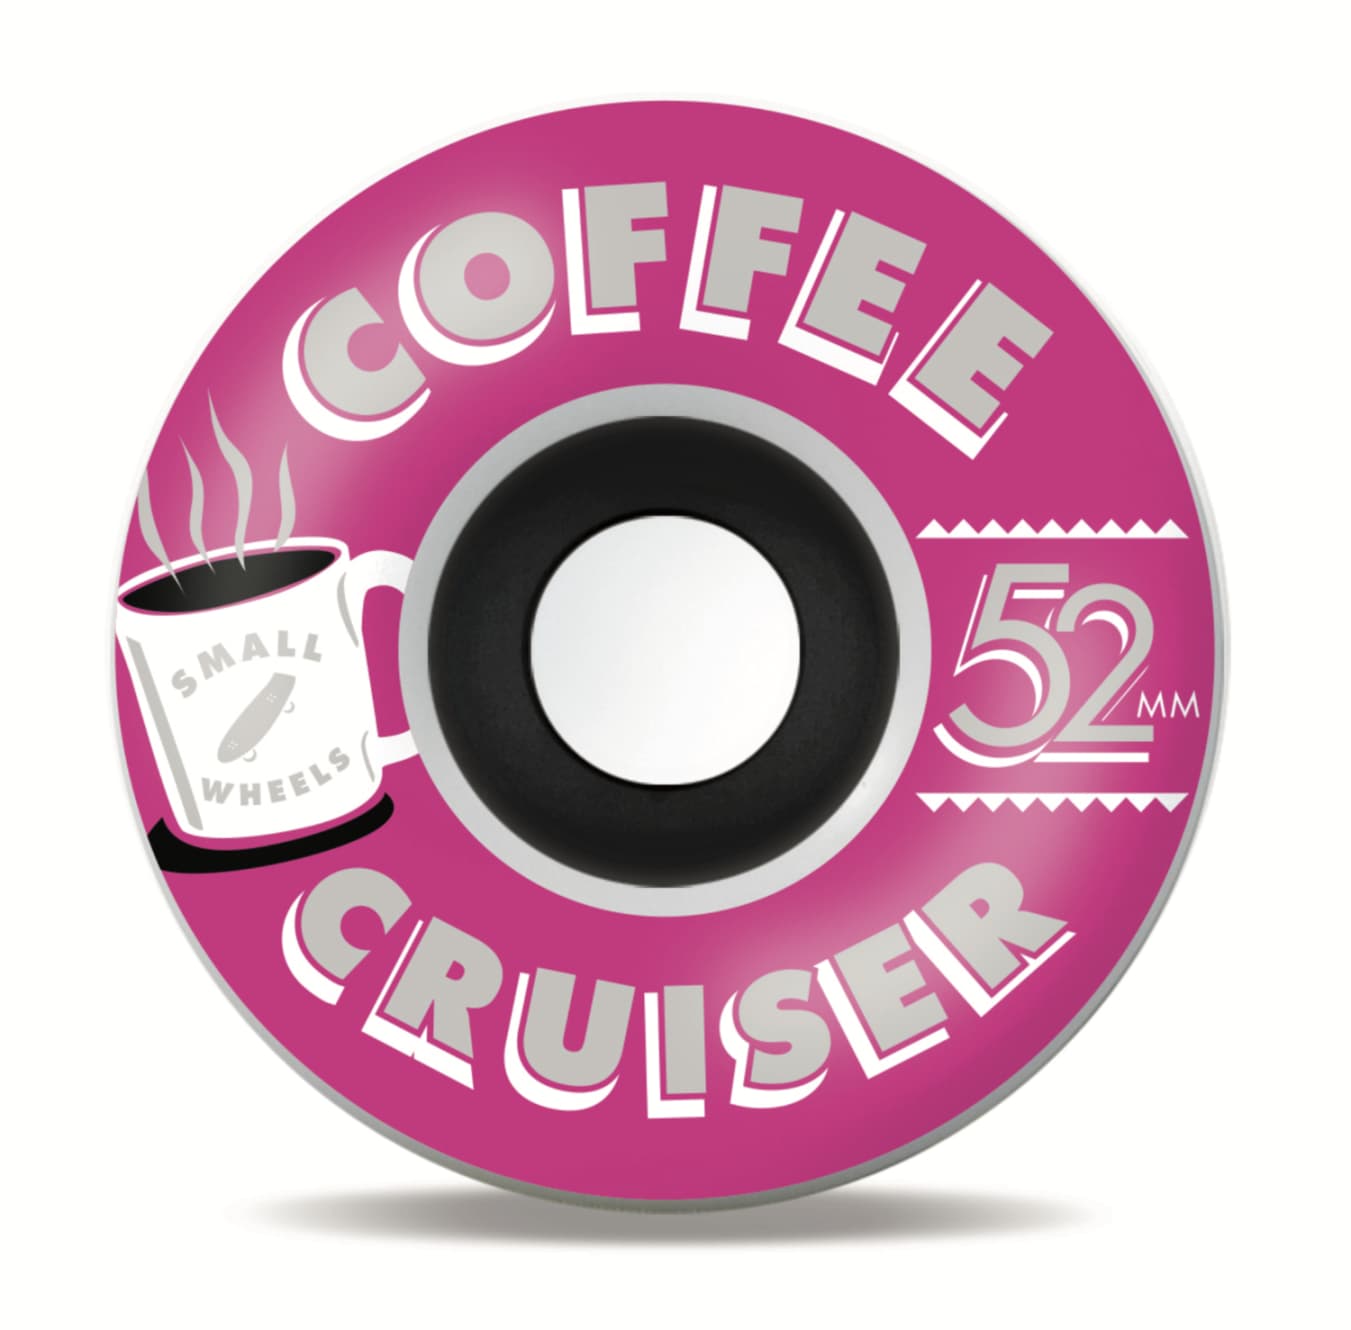 SML WHEELS - COFFEE CRUISERS BRUISERS 78A (52MM)